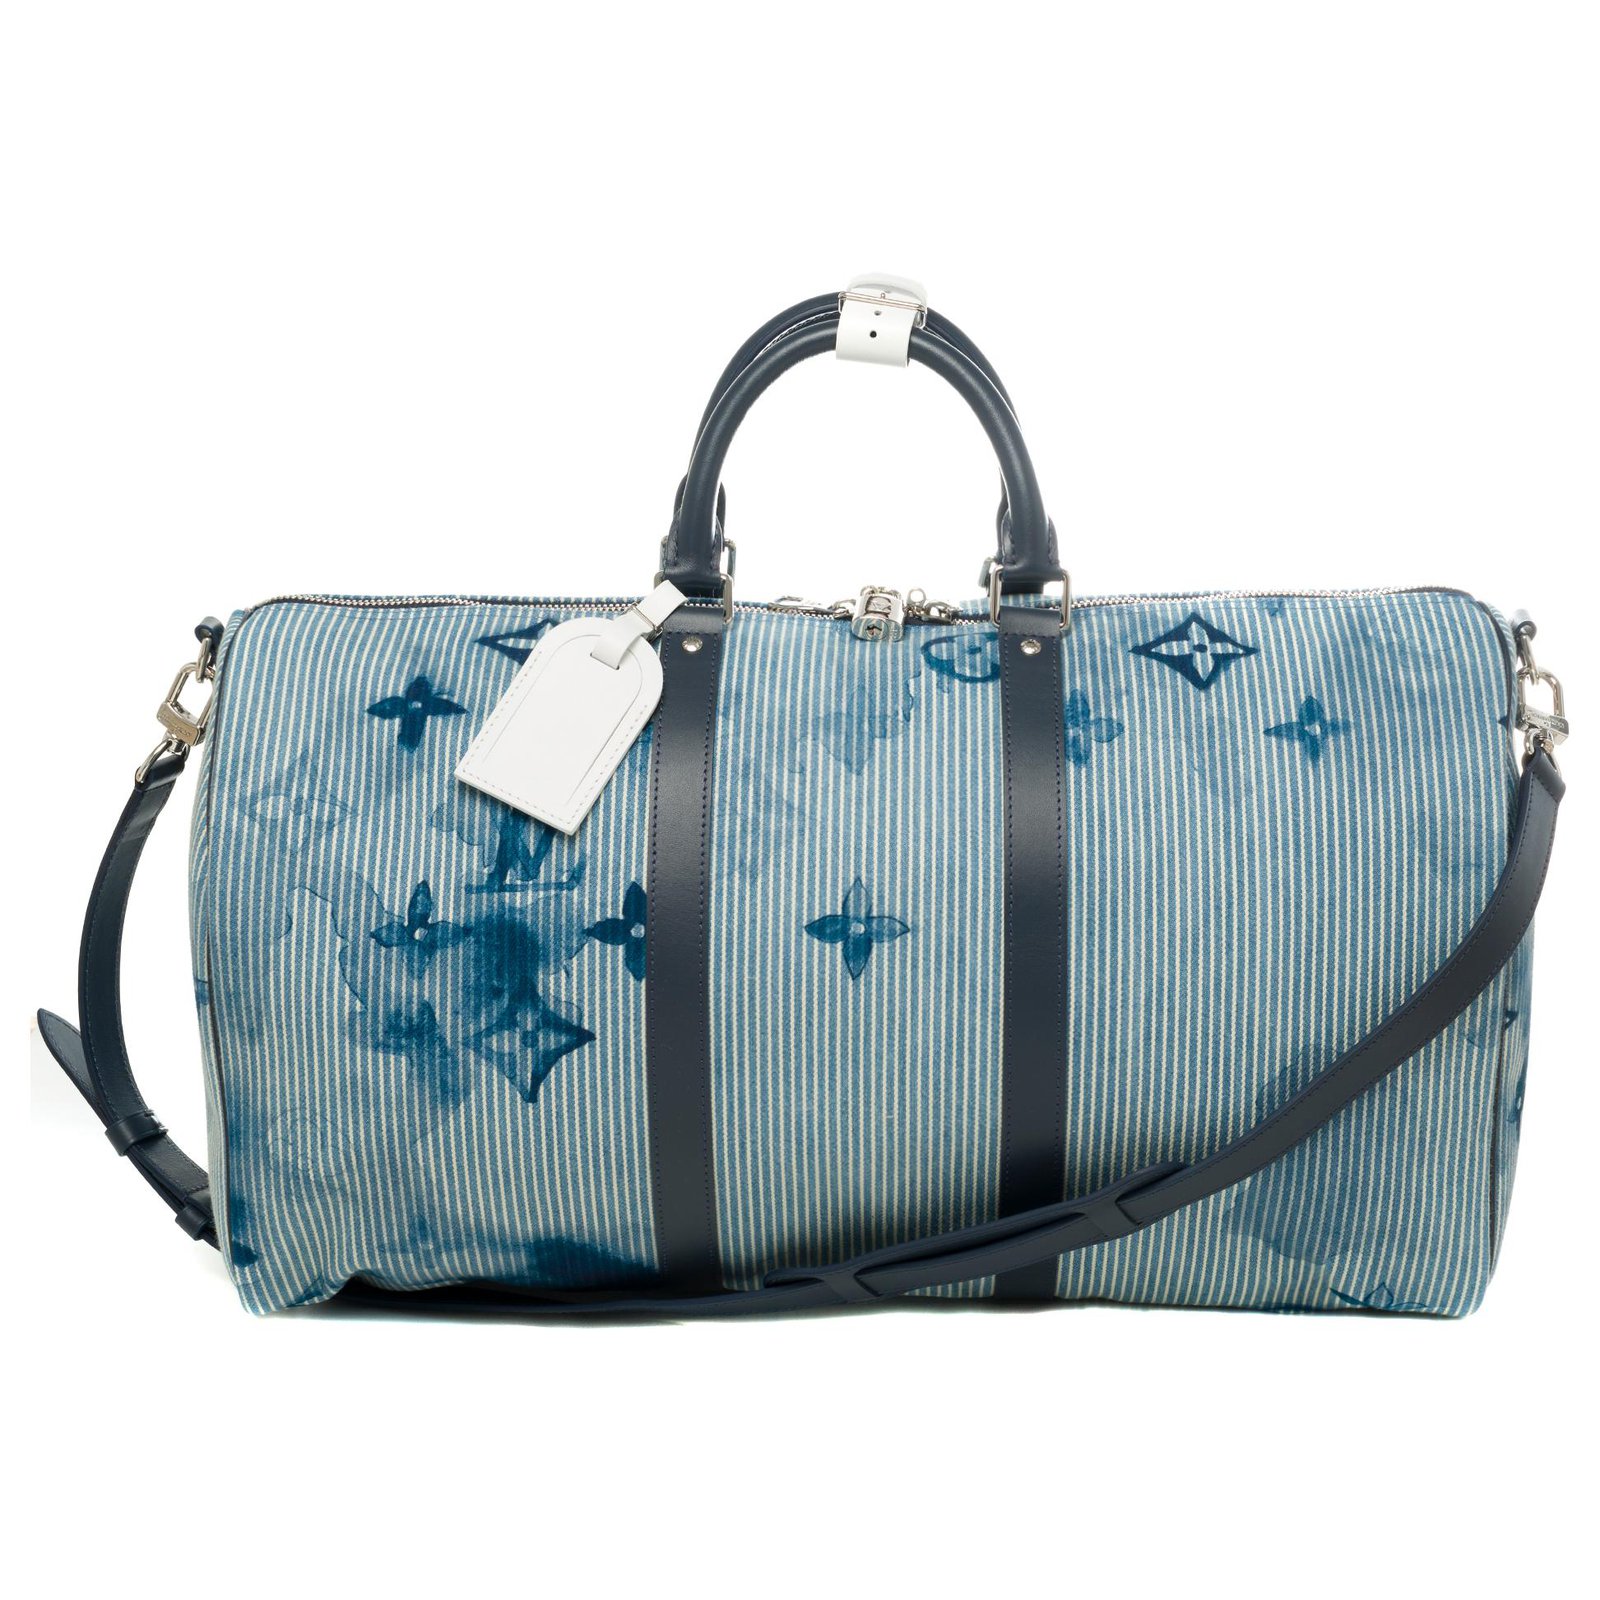 Louis Vuitton Blue Travel Bags